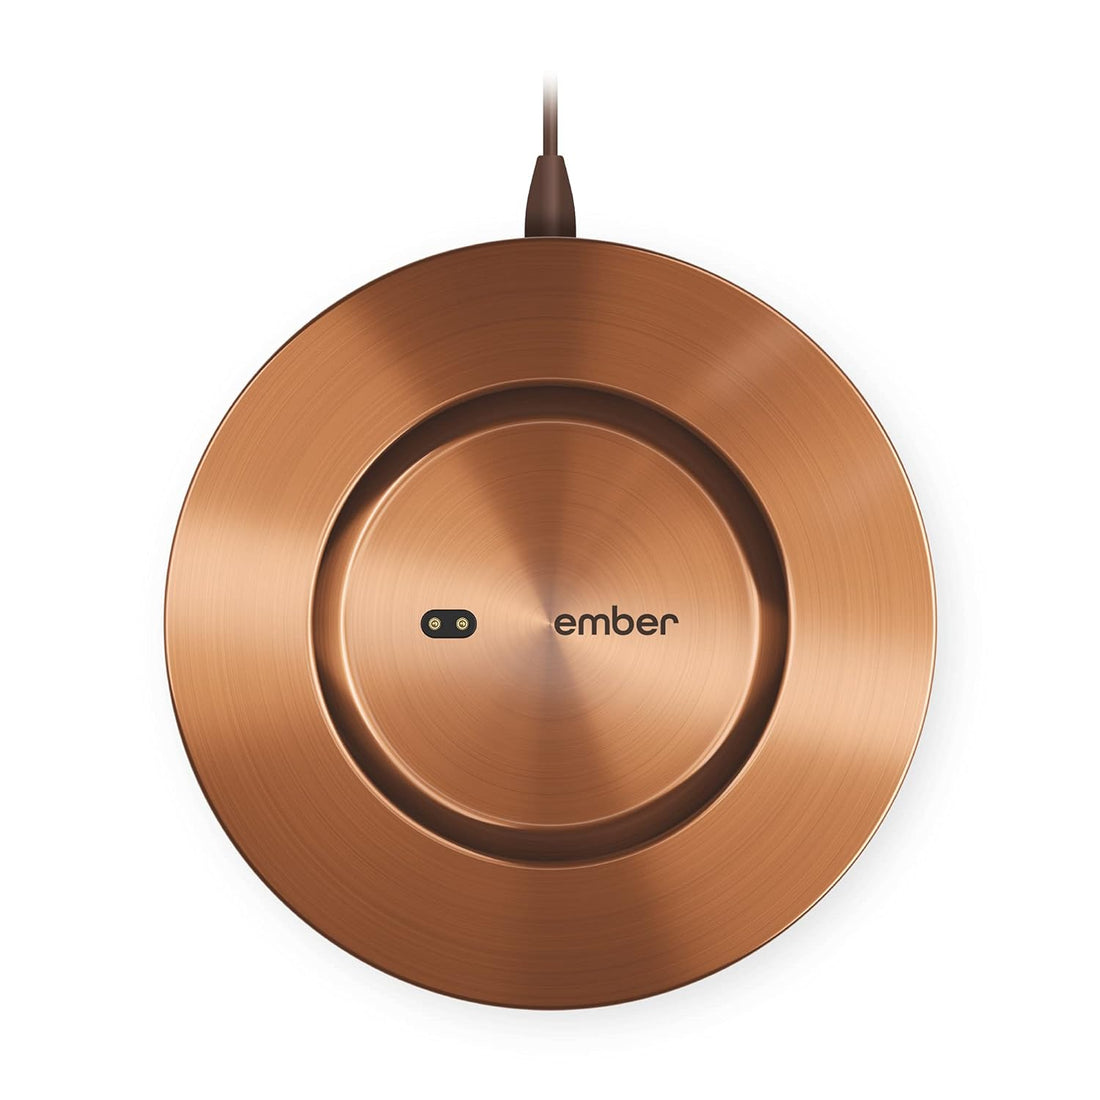 Ember Temperature Control Smart Mug 2 Charging Coaster, Black - New and Improved Design (Copper)